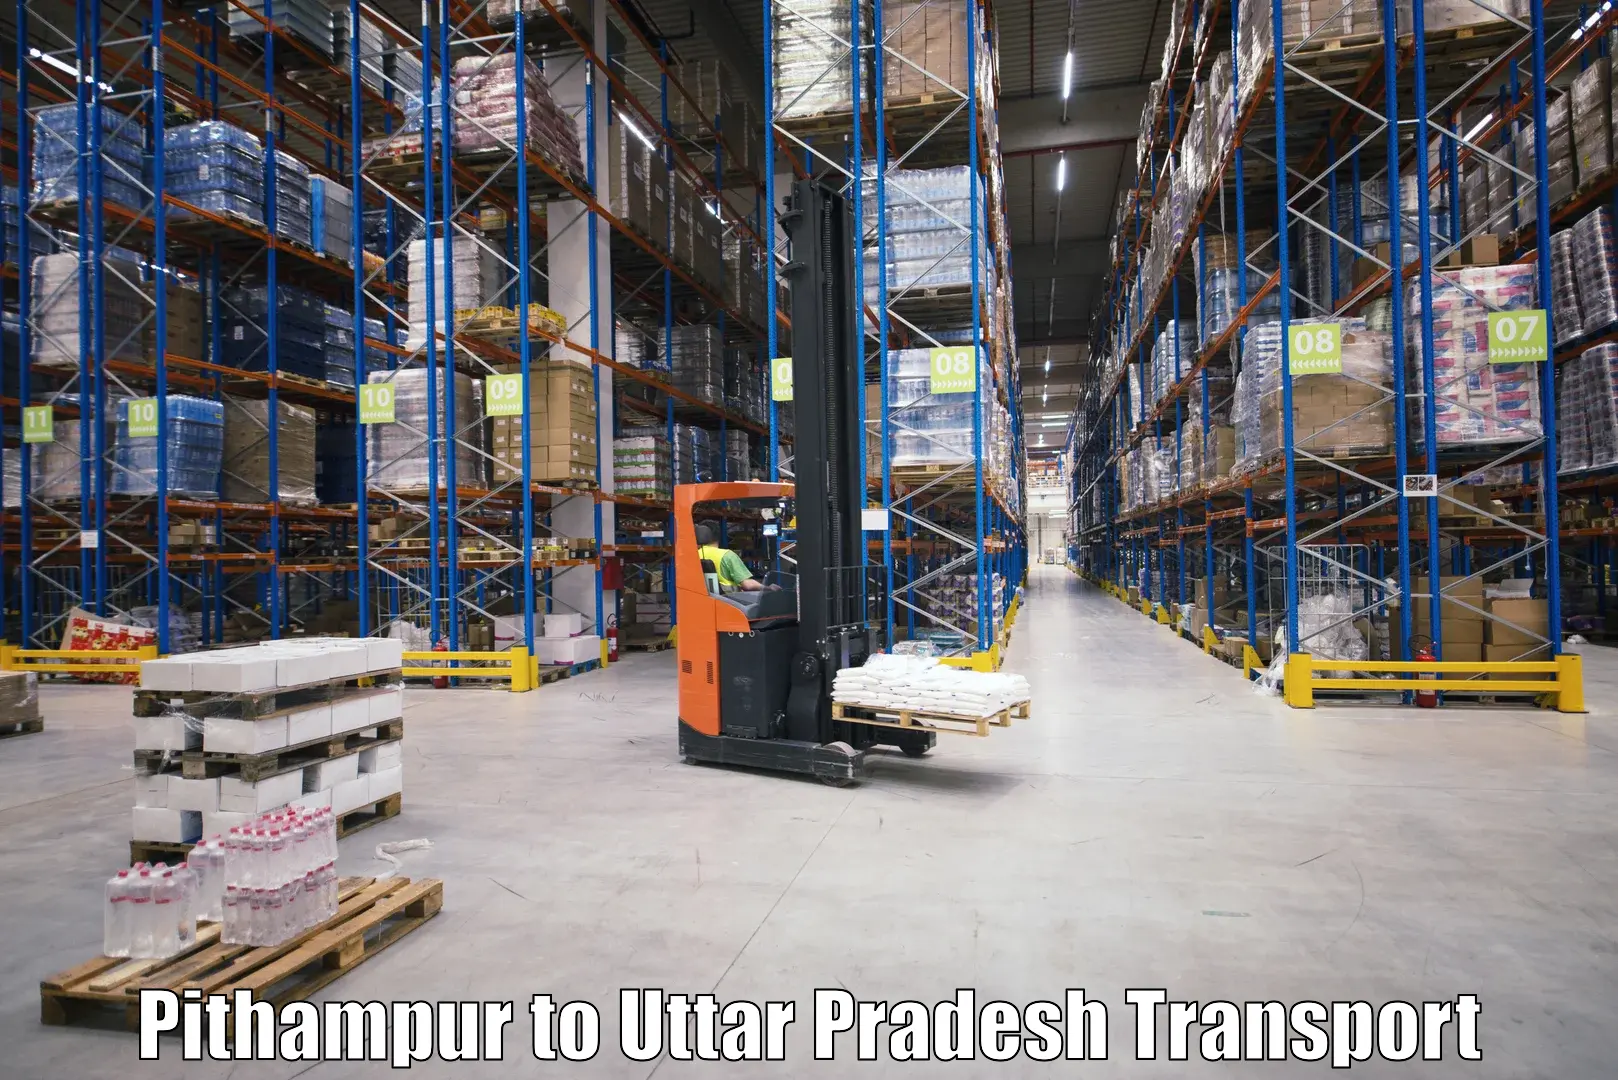 Shipping partner Pithampur to Khutar